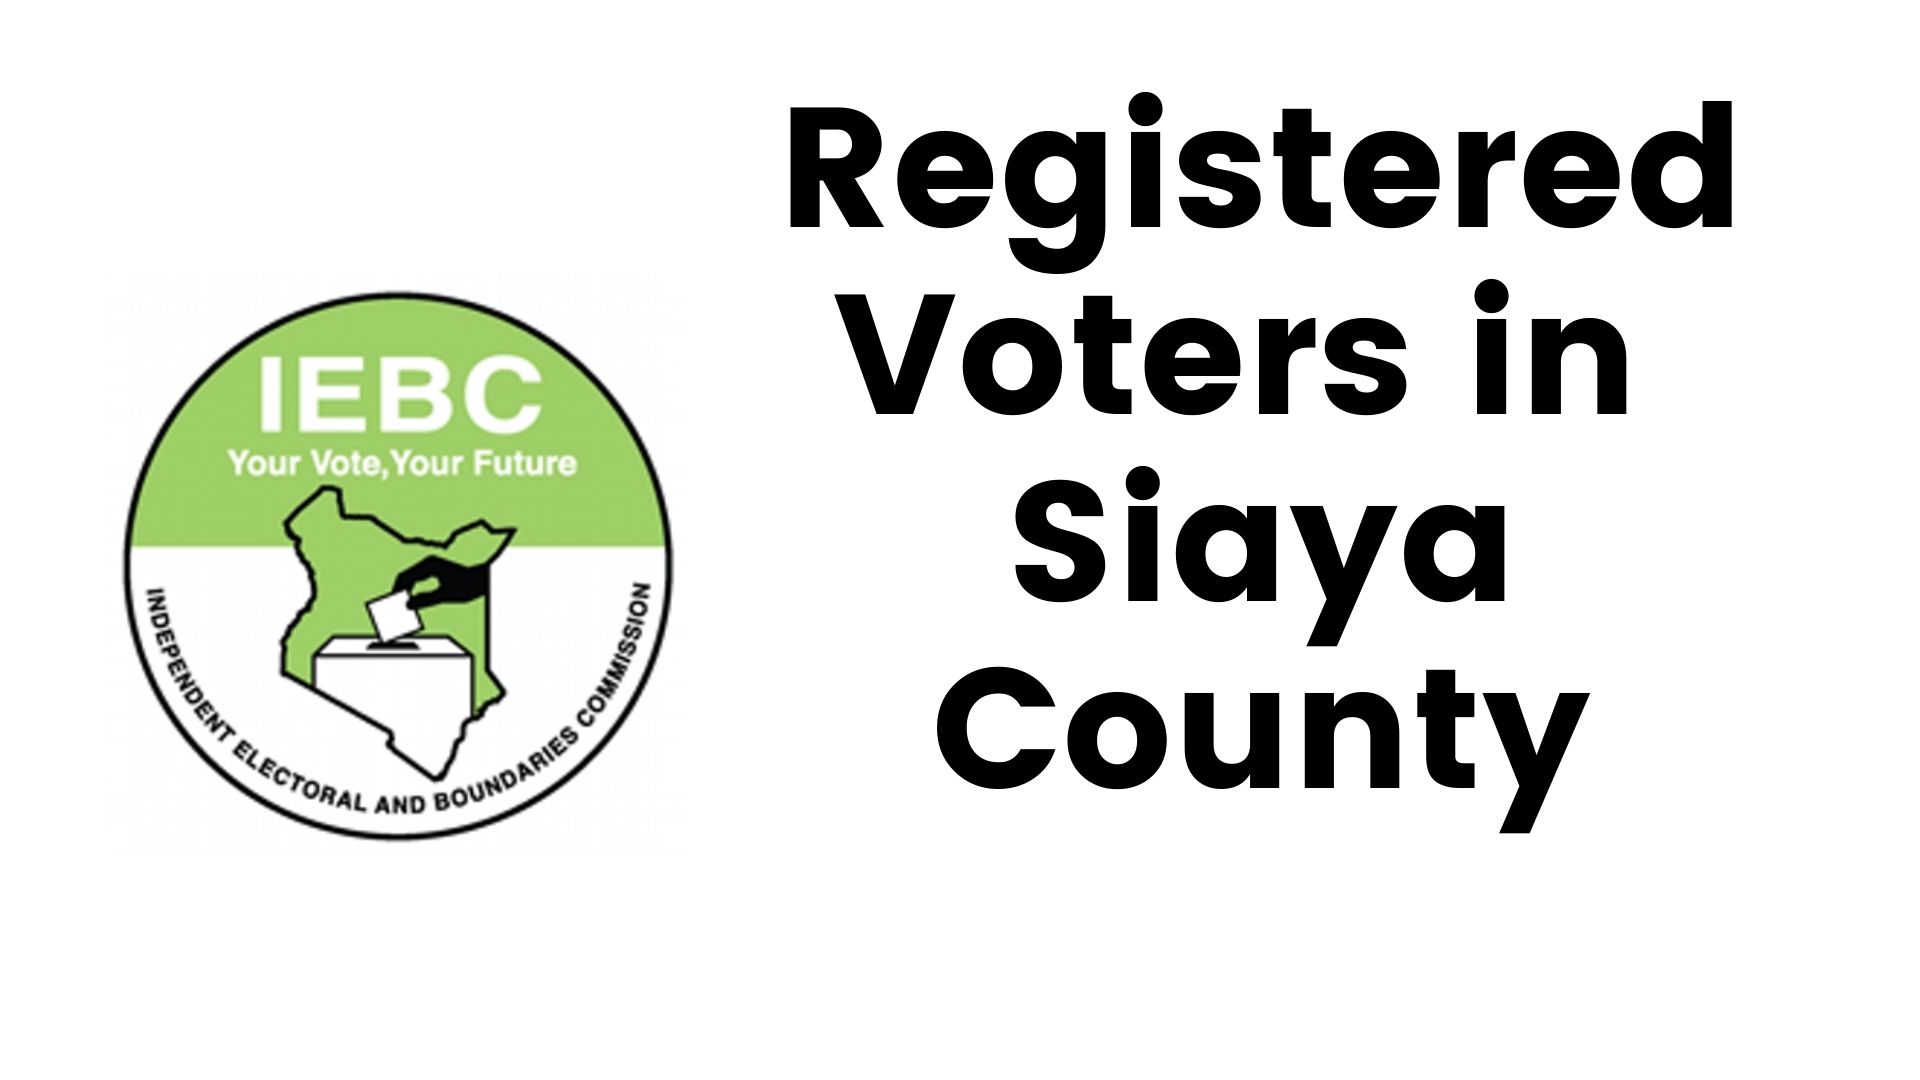 IEBC Siaya County Registered Voters